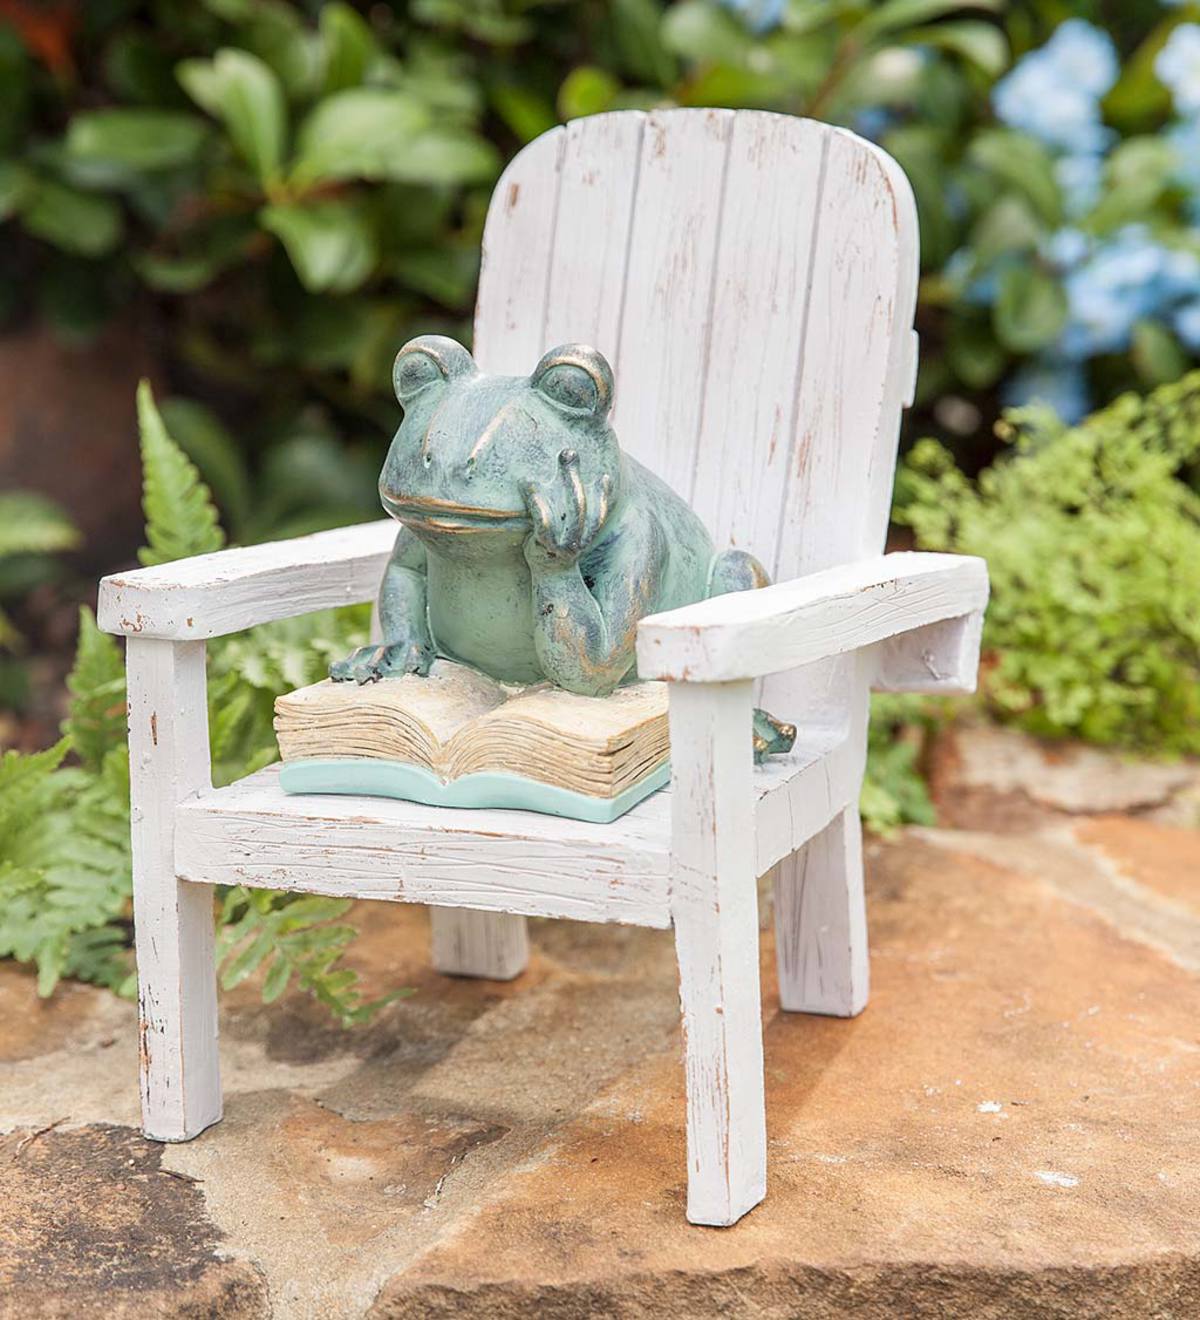 Reading Frog Garden Statue